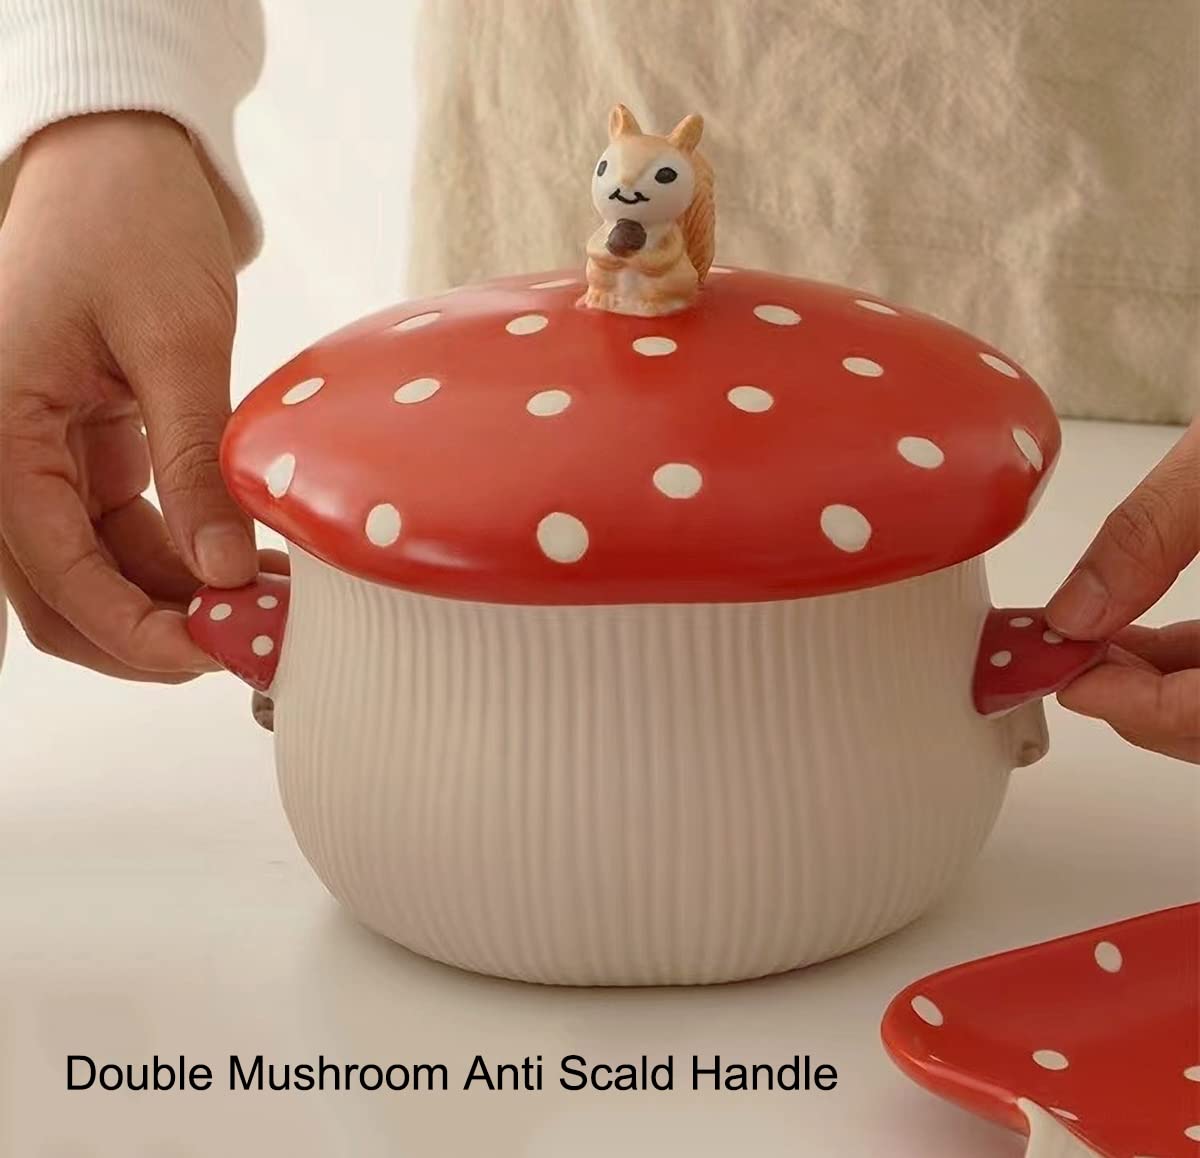 RESVUGA Large Soup Bowl, Double Mushroom Handle & Mushroom Lid - Safety Matt Ceramics 32oz Noodles Bowls, Use for Stew, Salad, Porridge & More.